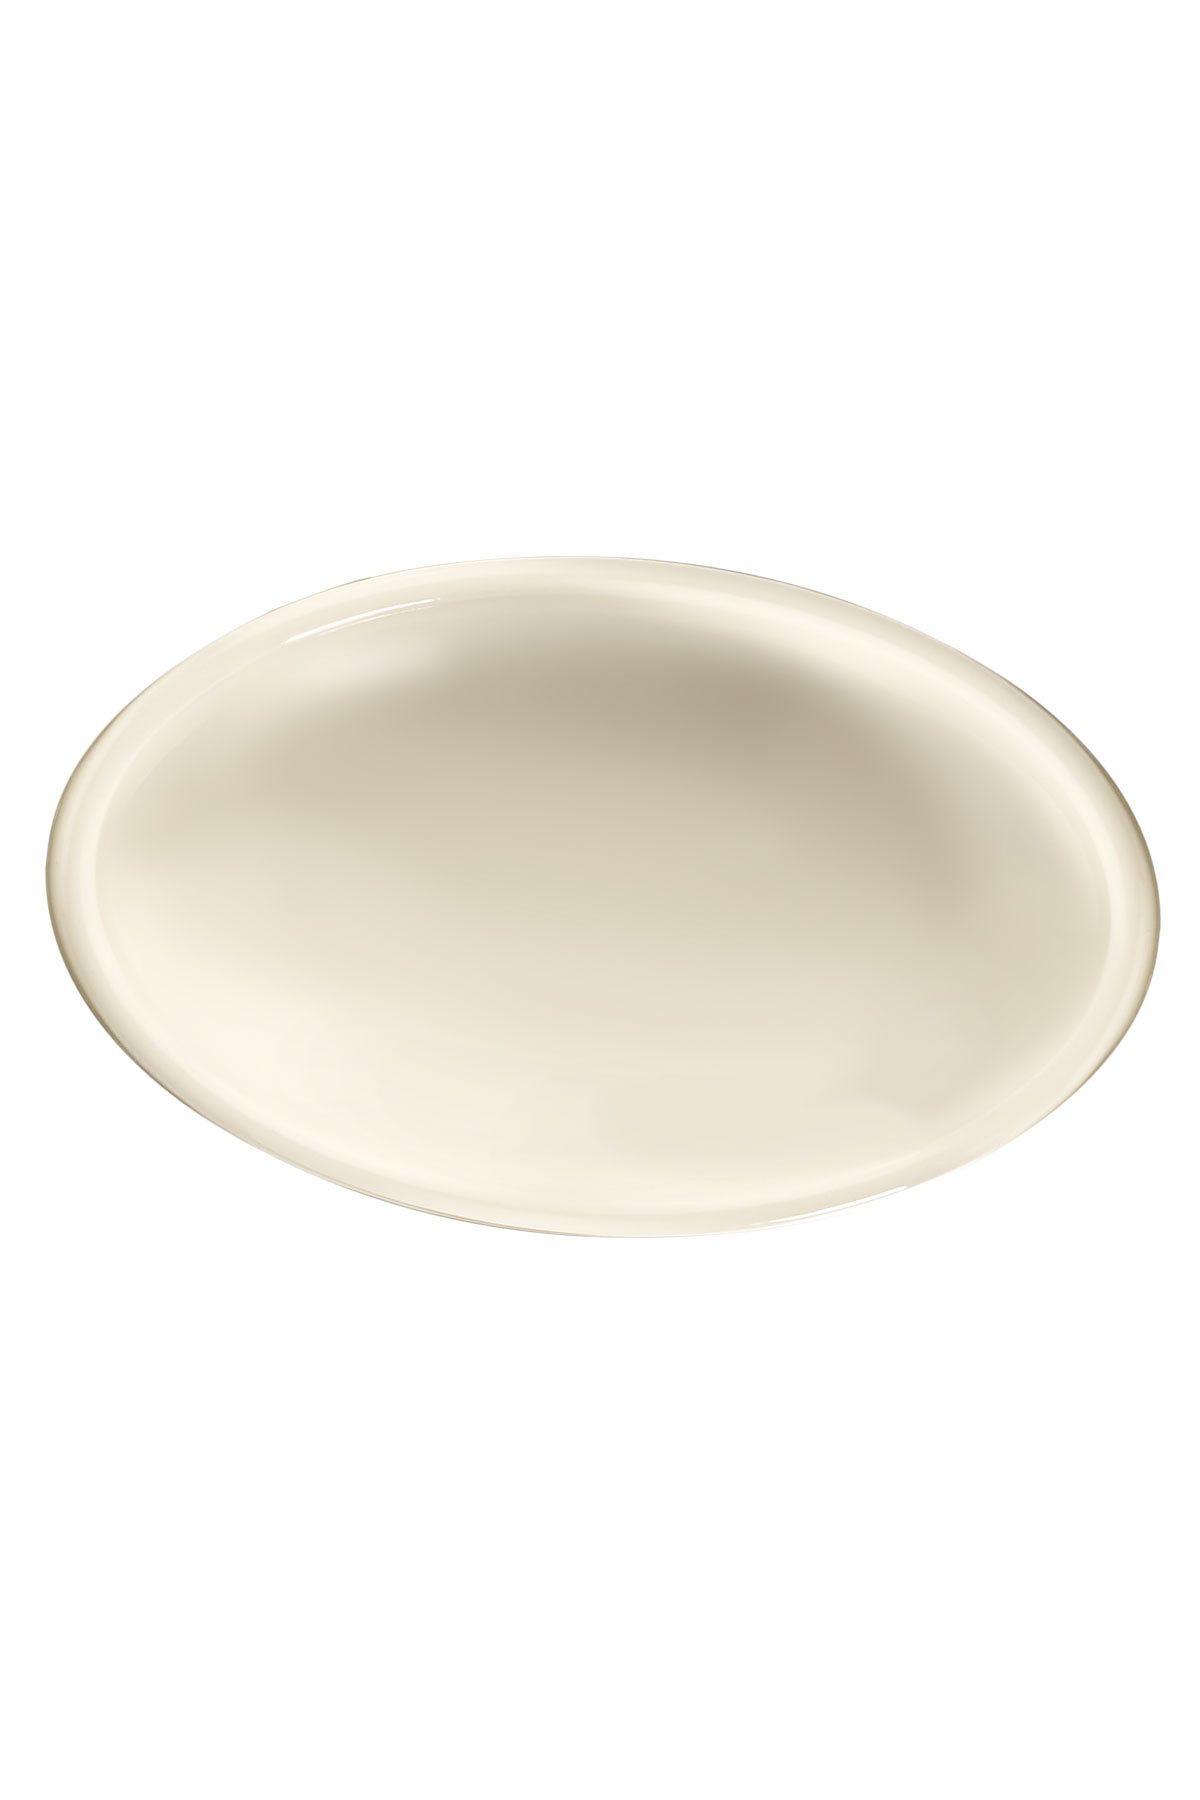 Kütahya Porselen Chef Taste Of 17 cm Oval Kase Krem